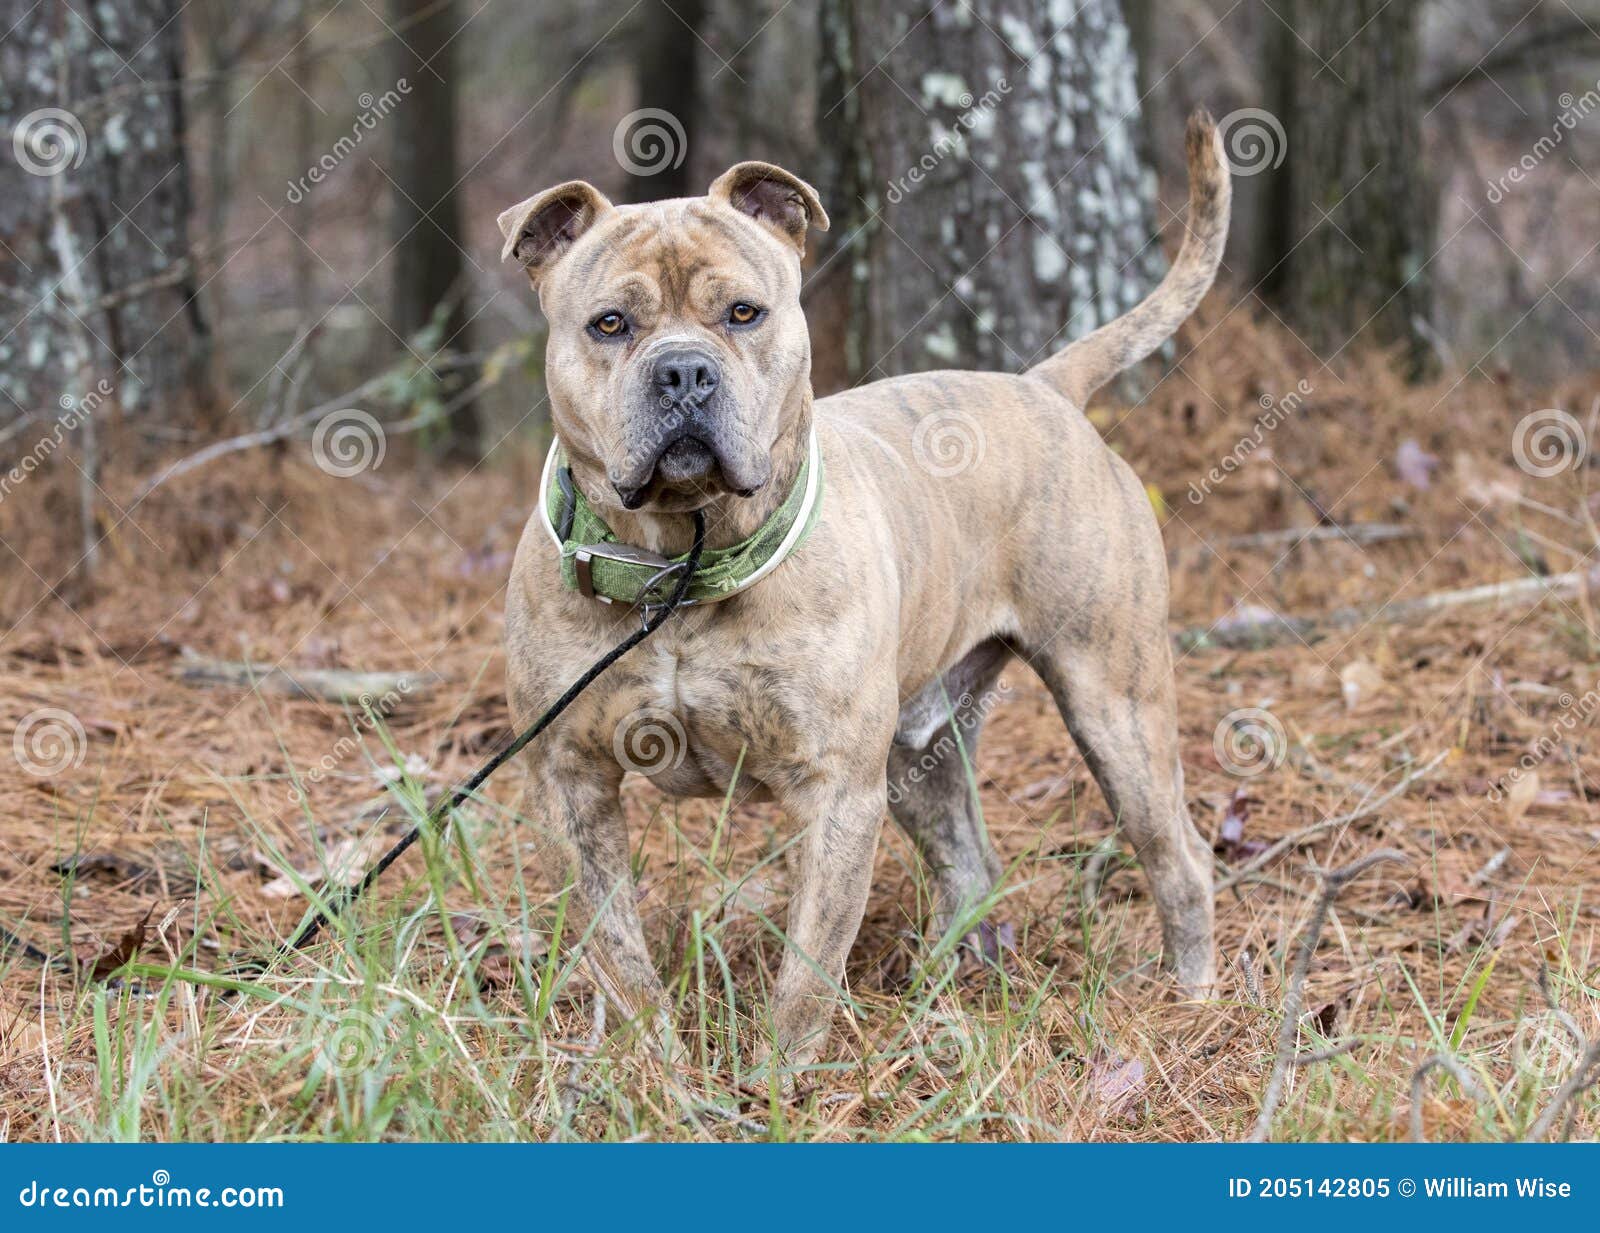 Large Bulldog Pitbull Presa Canario Mix Breed Dog with Collar Stock Image Image bulldog, flea: 205142805